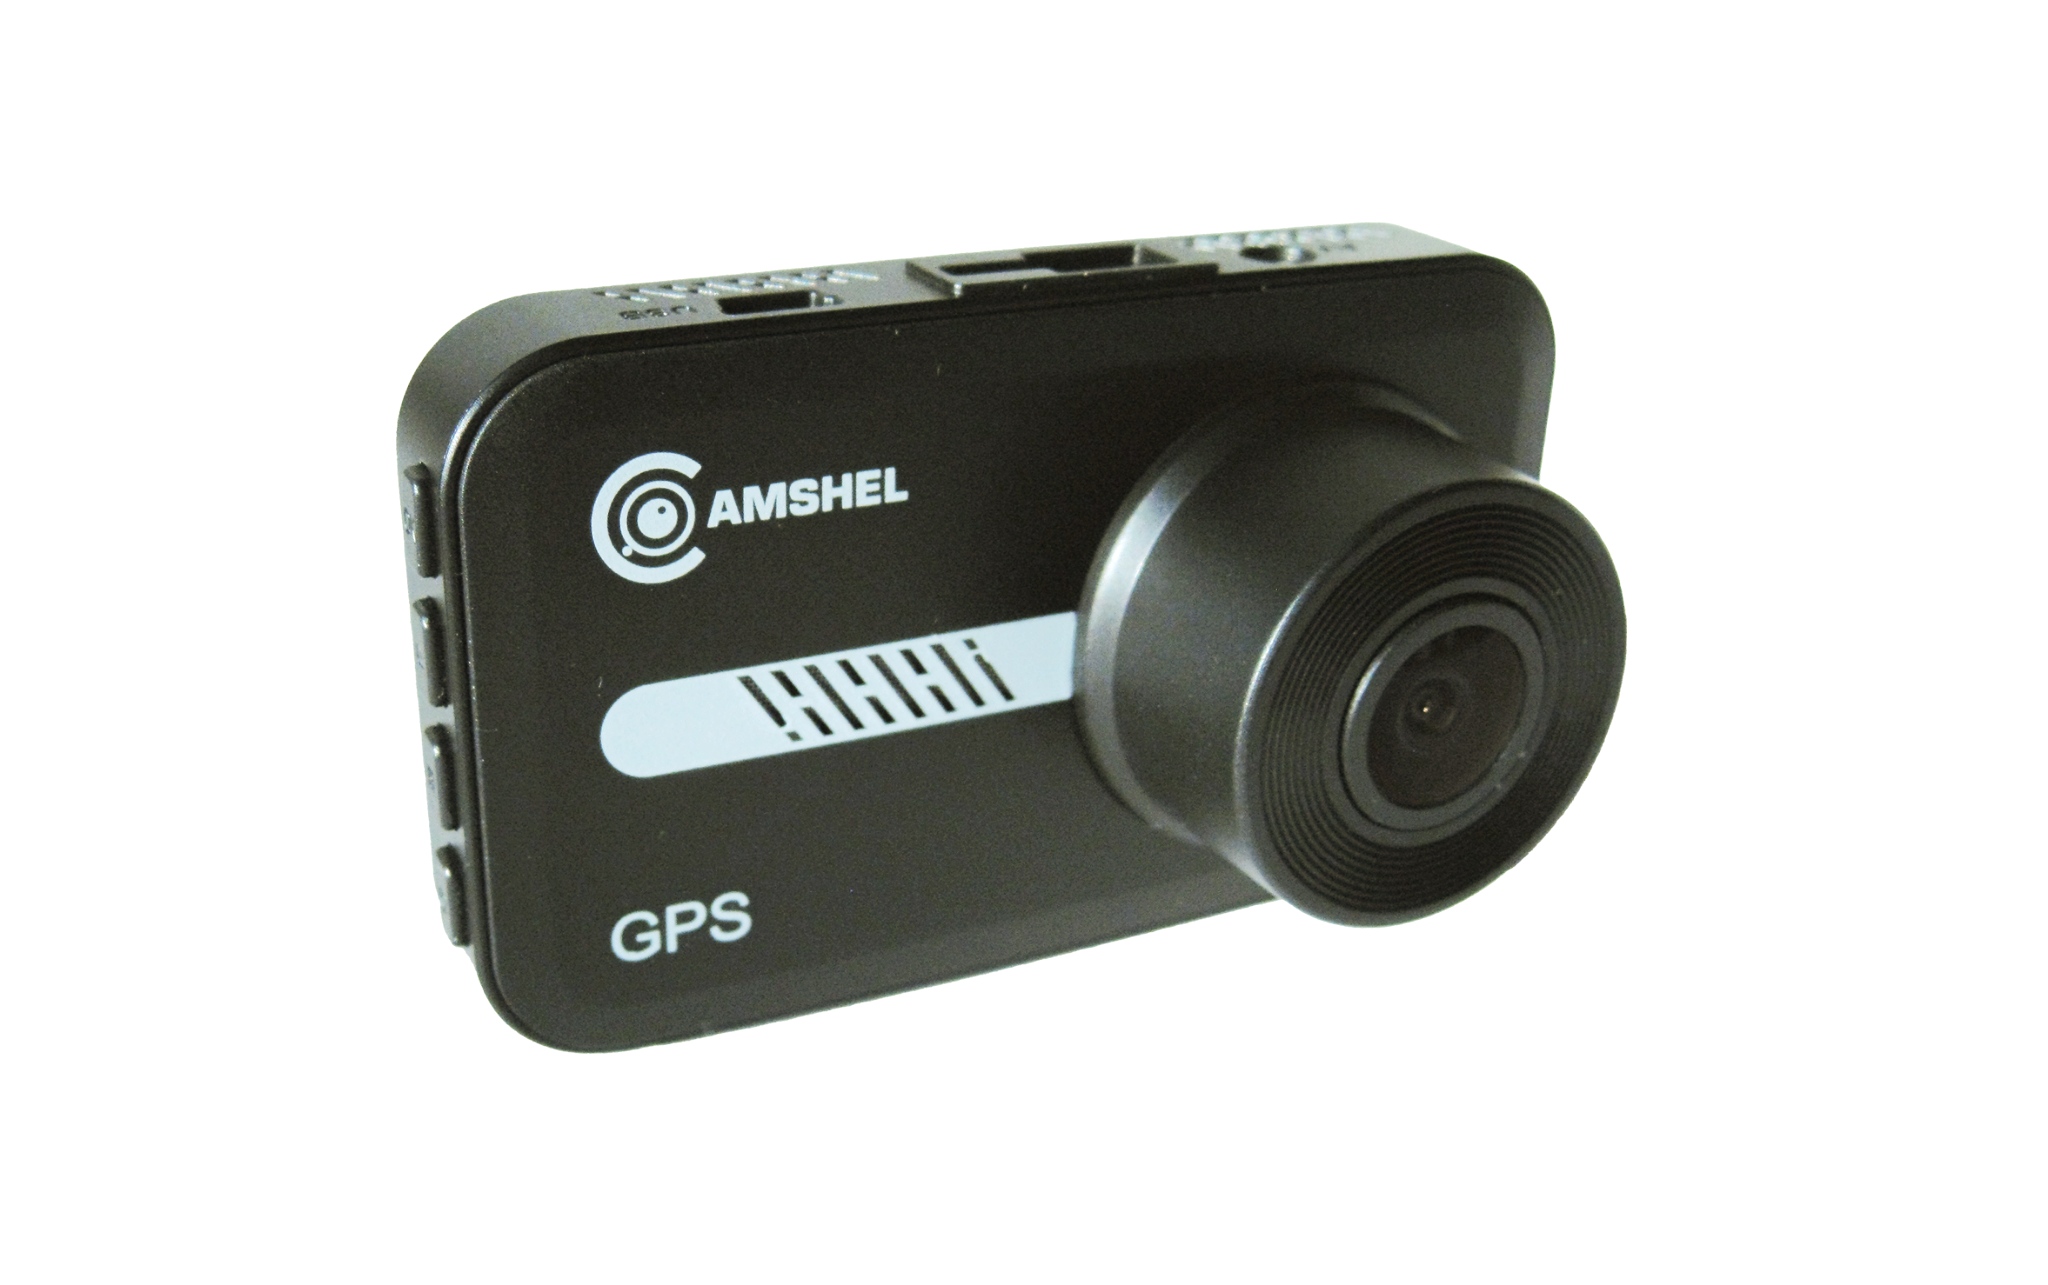 Camshel DVR 260 GPS